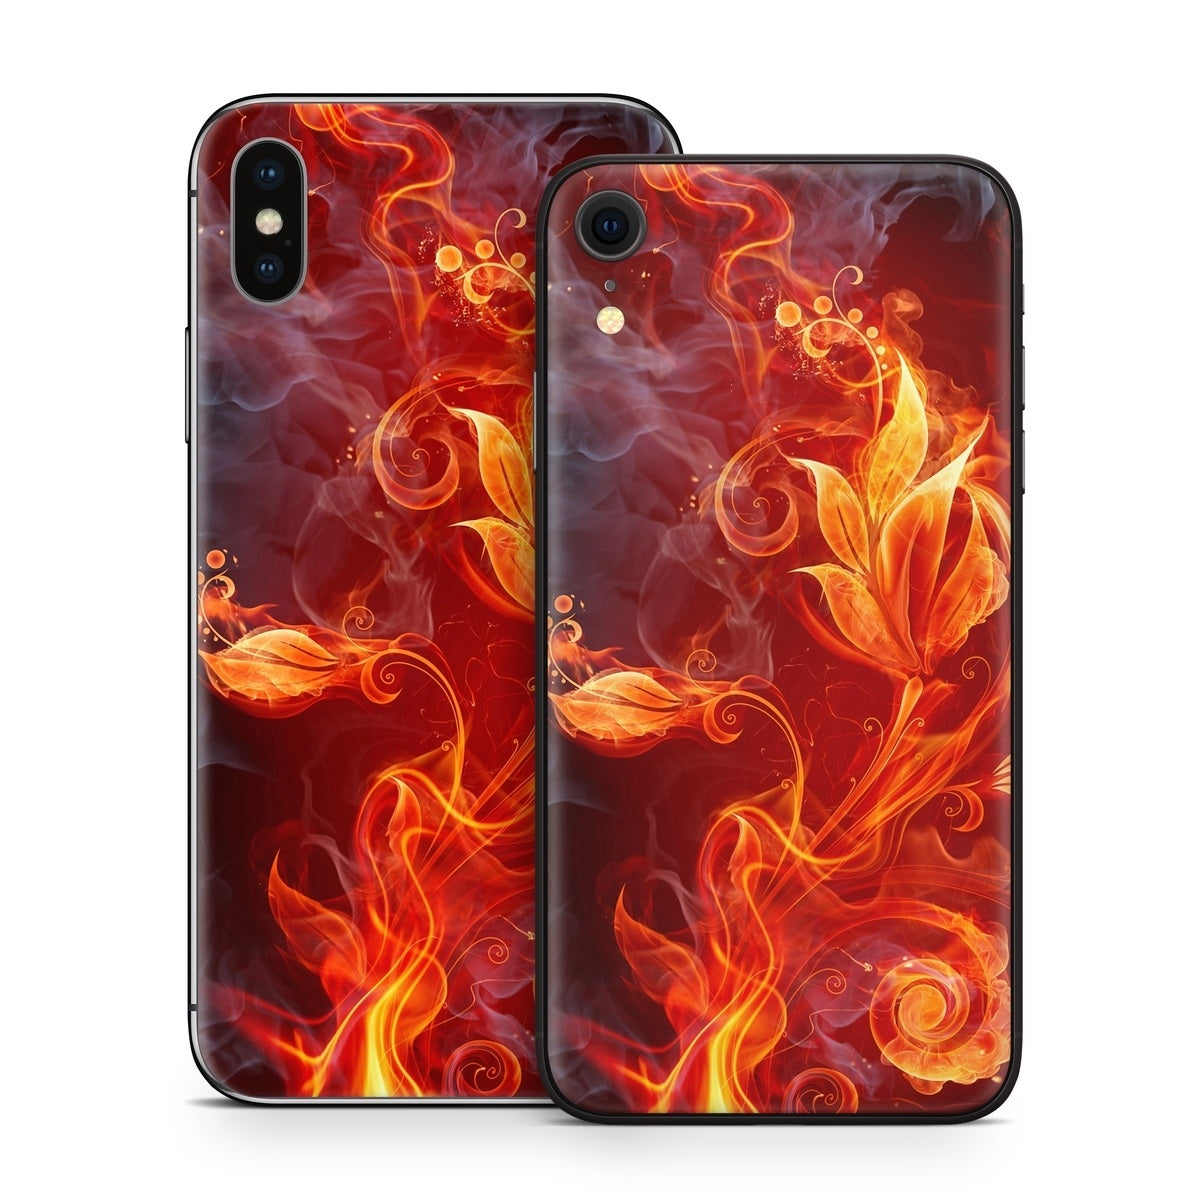 Flower Of Fire - Apple iPhone X Skin